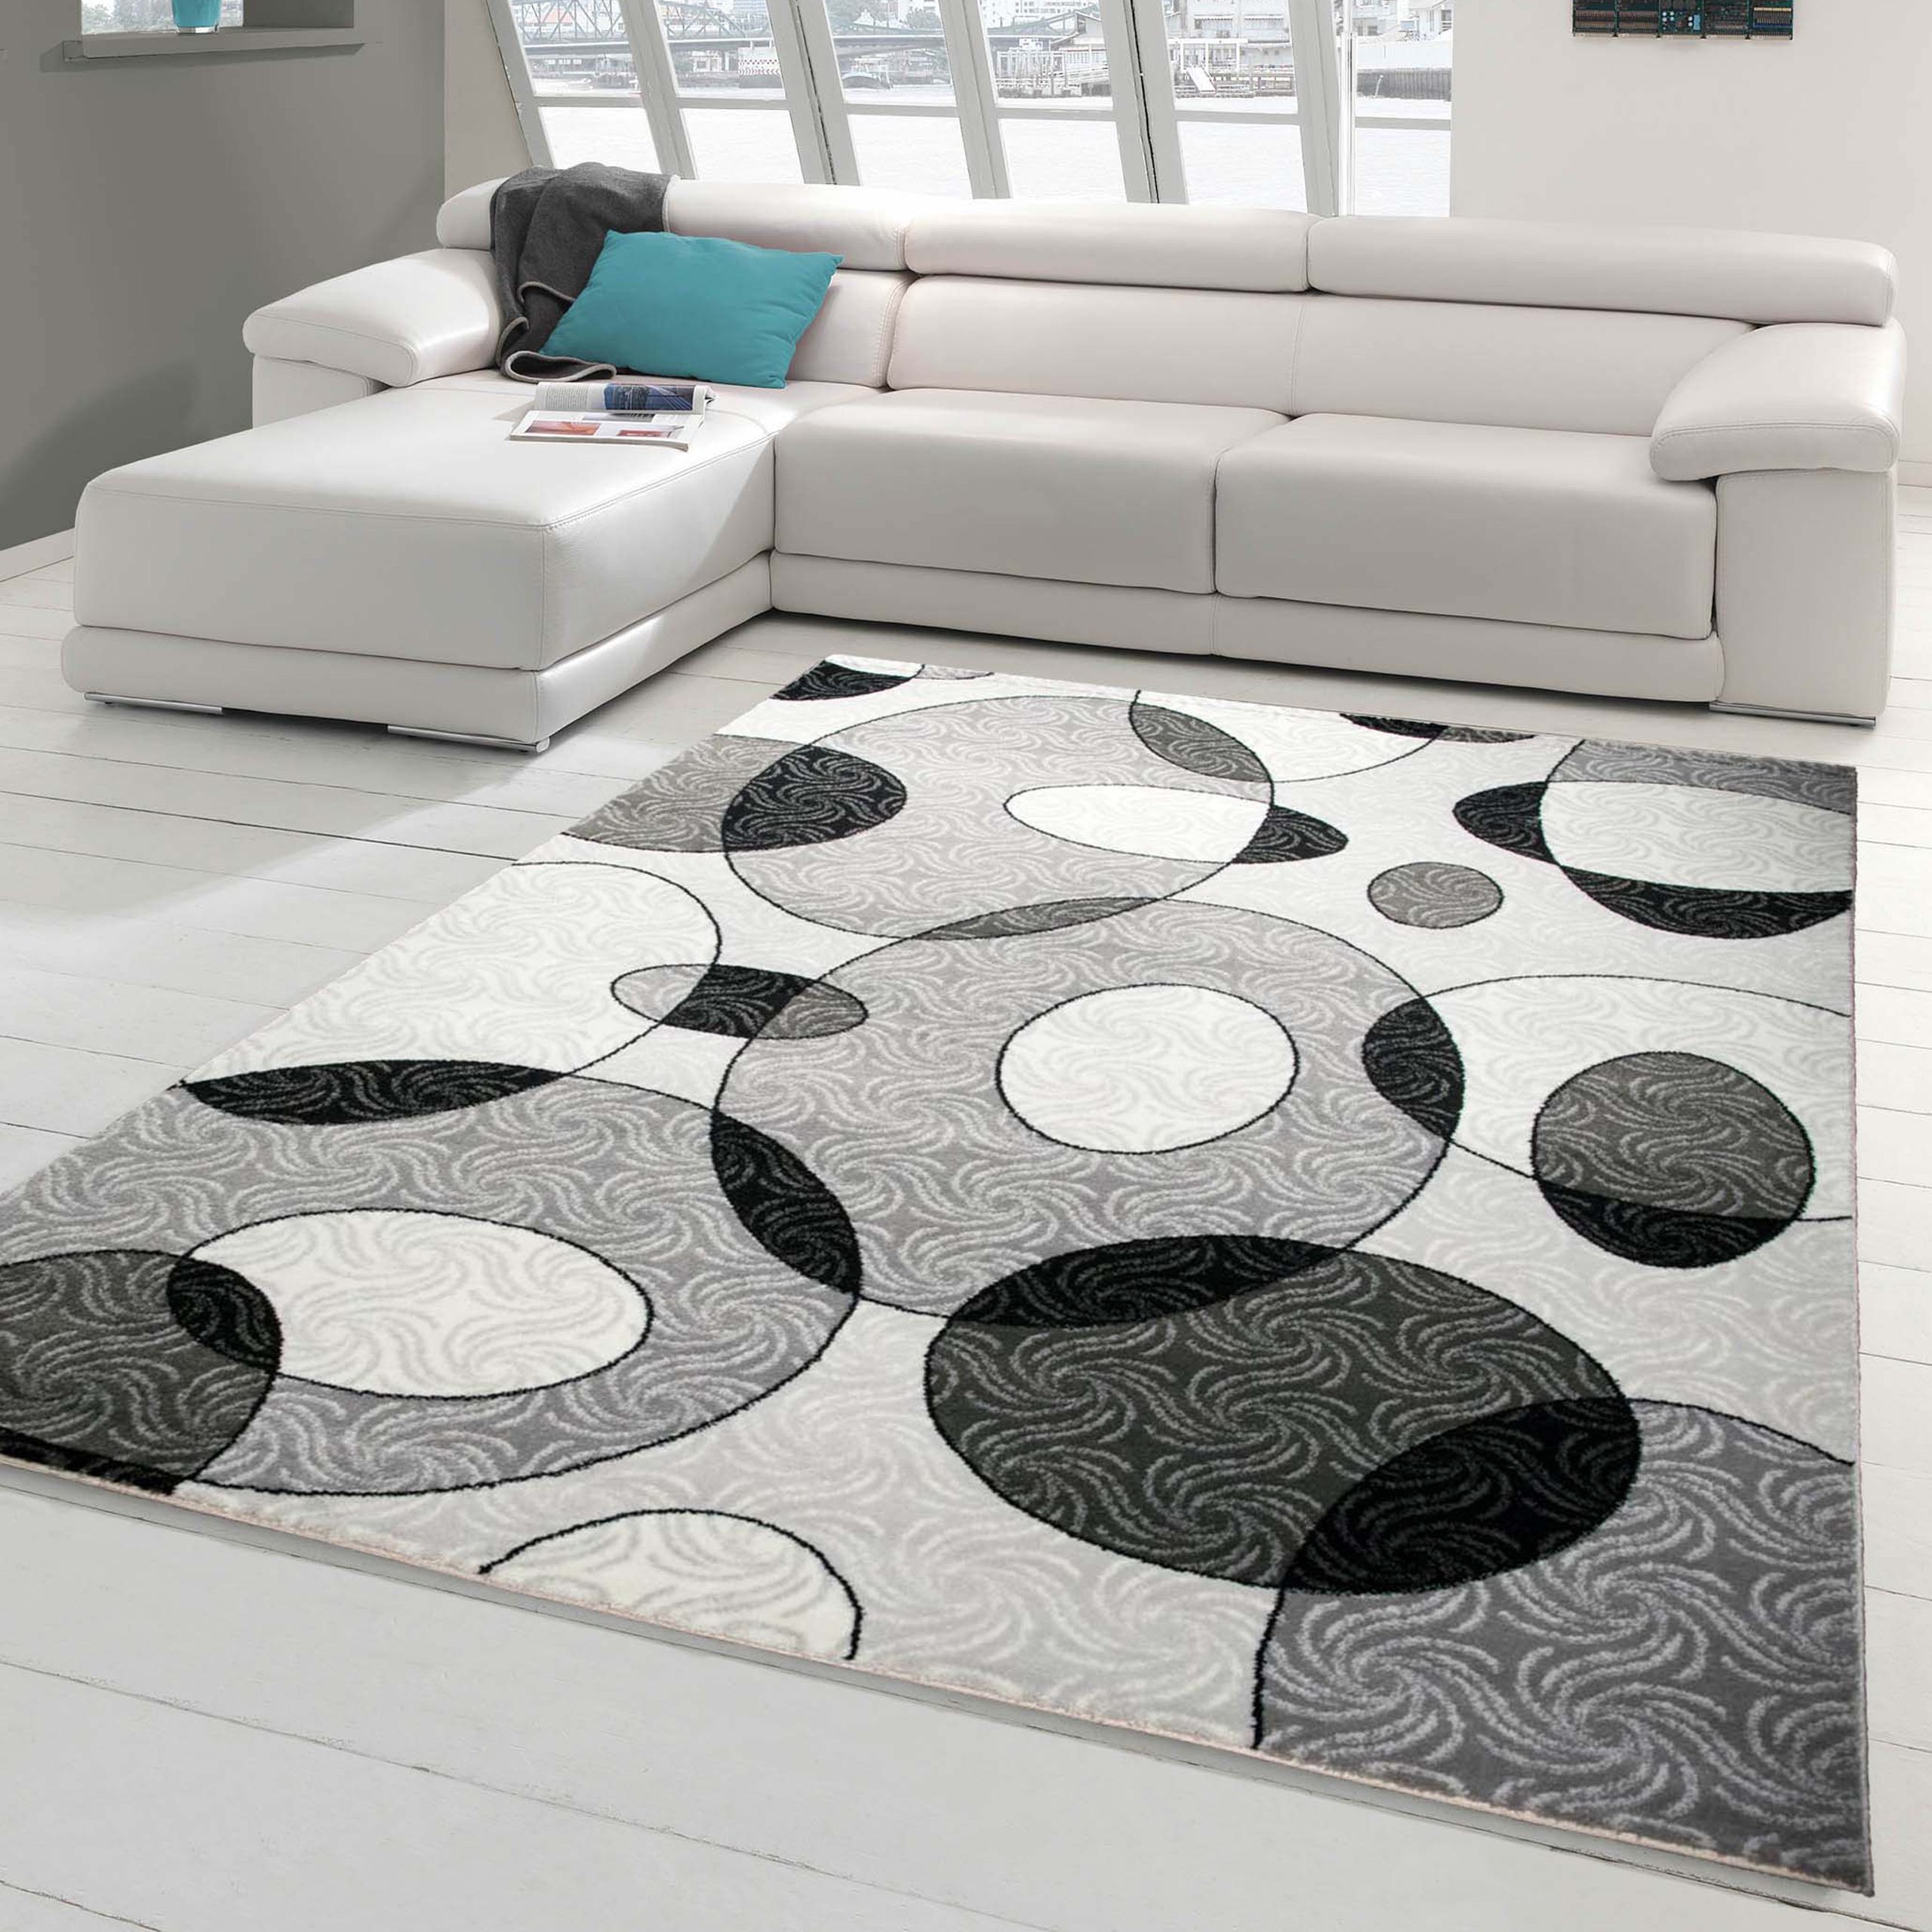 Modern & at dreams -Traum designer Teppich cheap - carpet and High-quality carpets